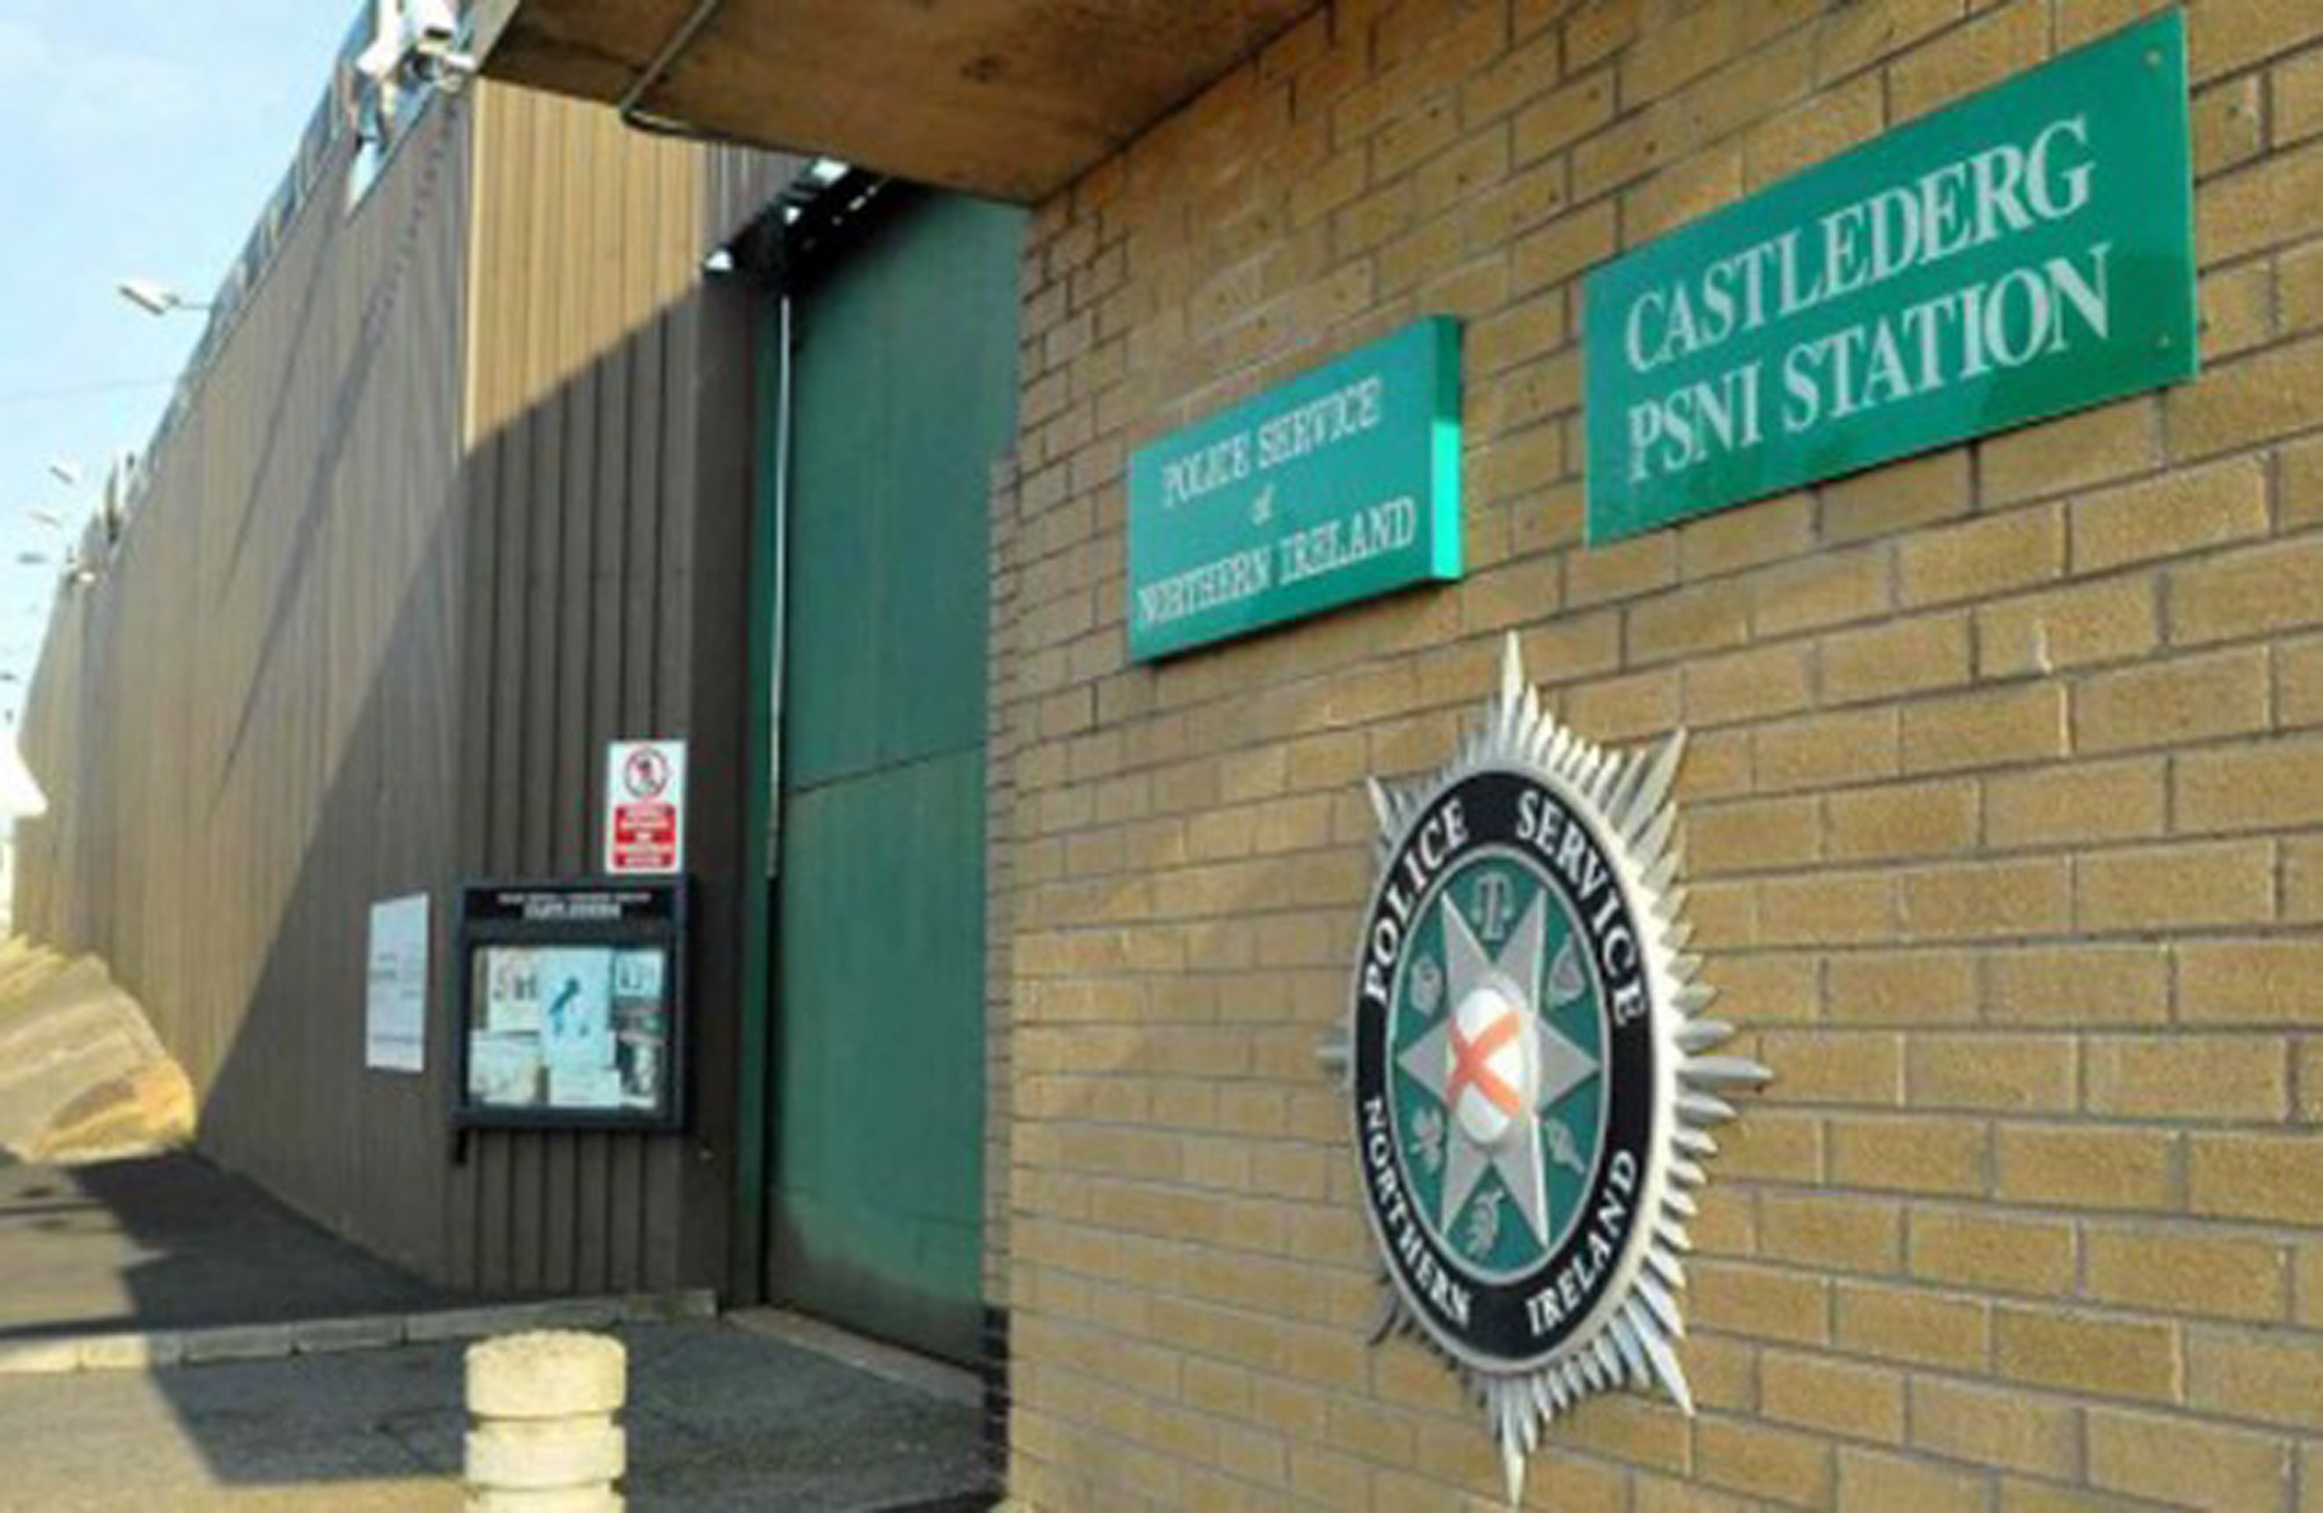 New interest in developing former Derg police station